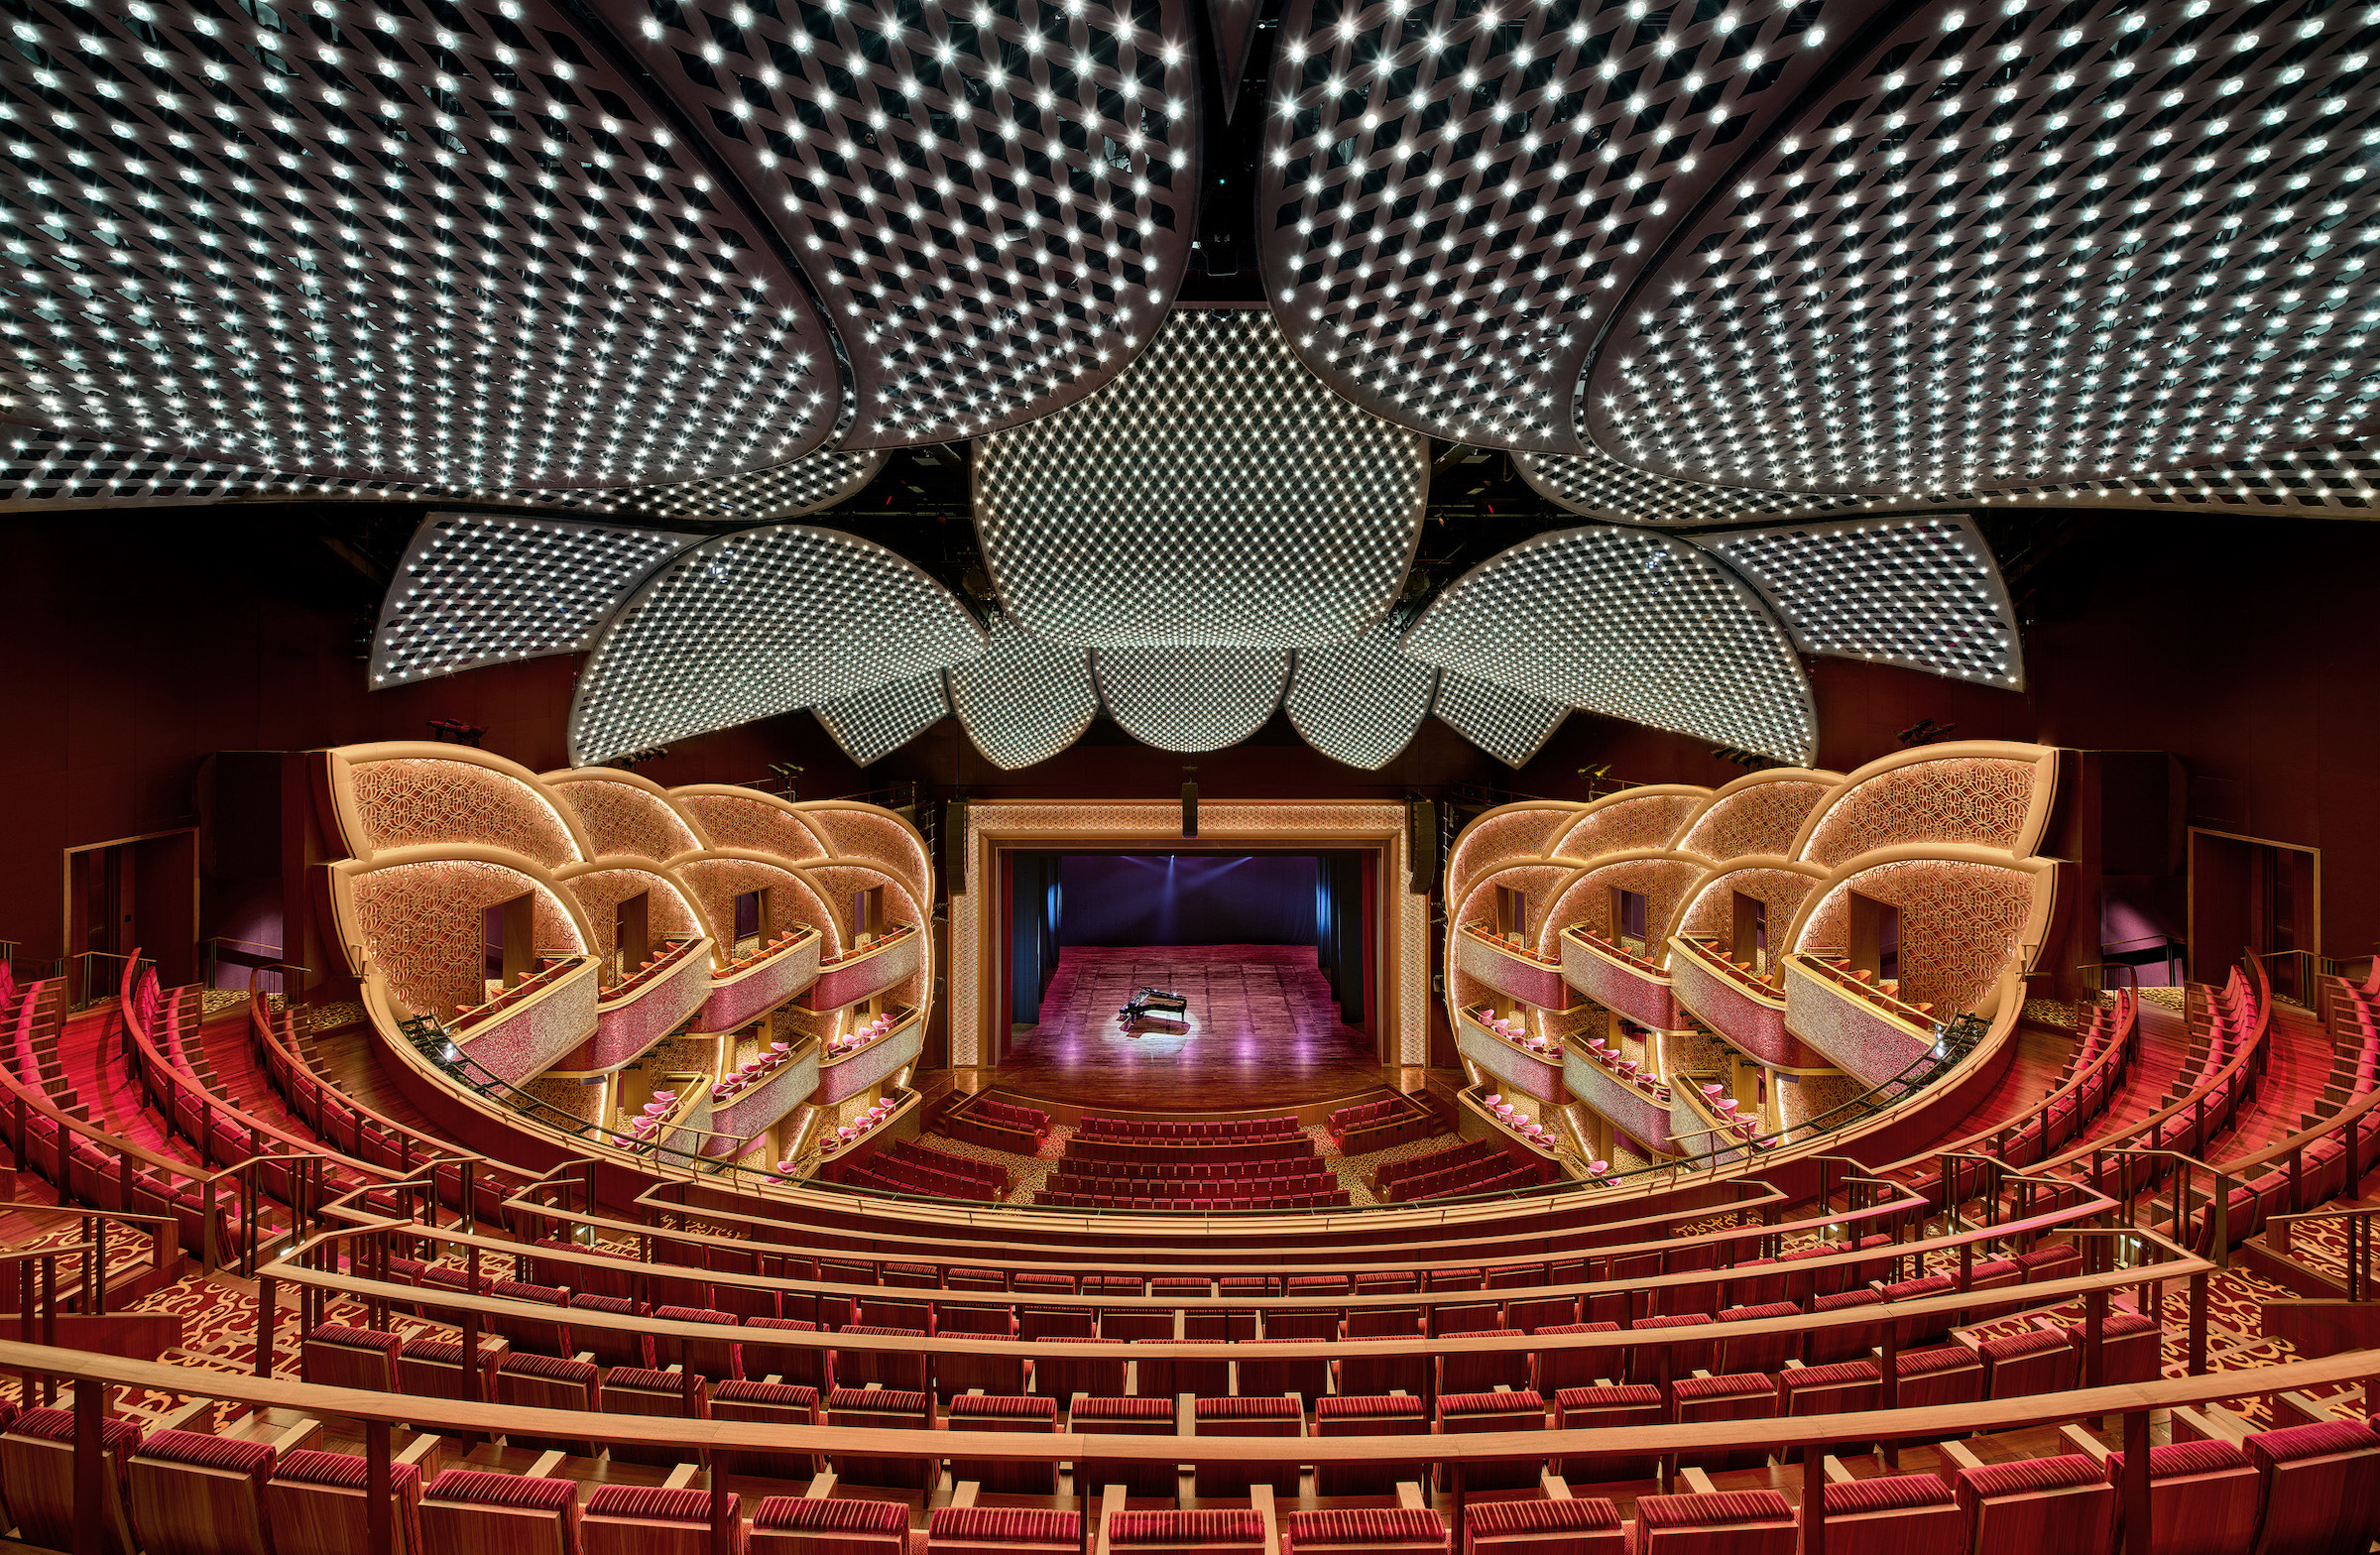 Grand Theatre and Bespoke Swarovski Crystal Ceiling